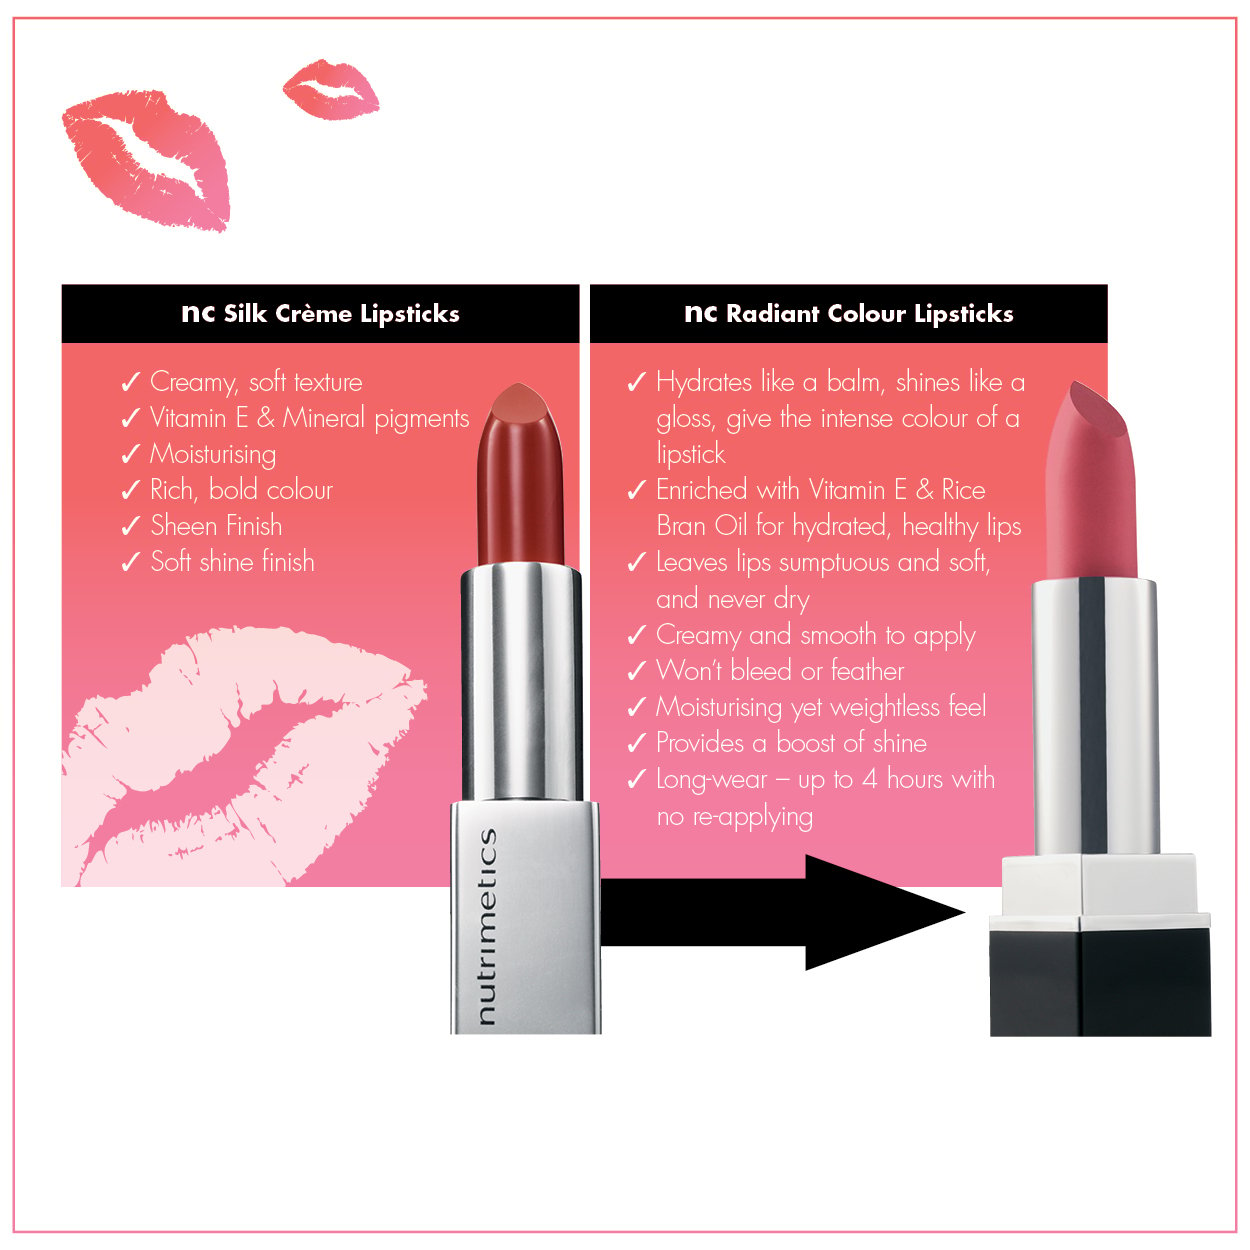 Evolution of lipstick